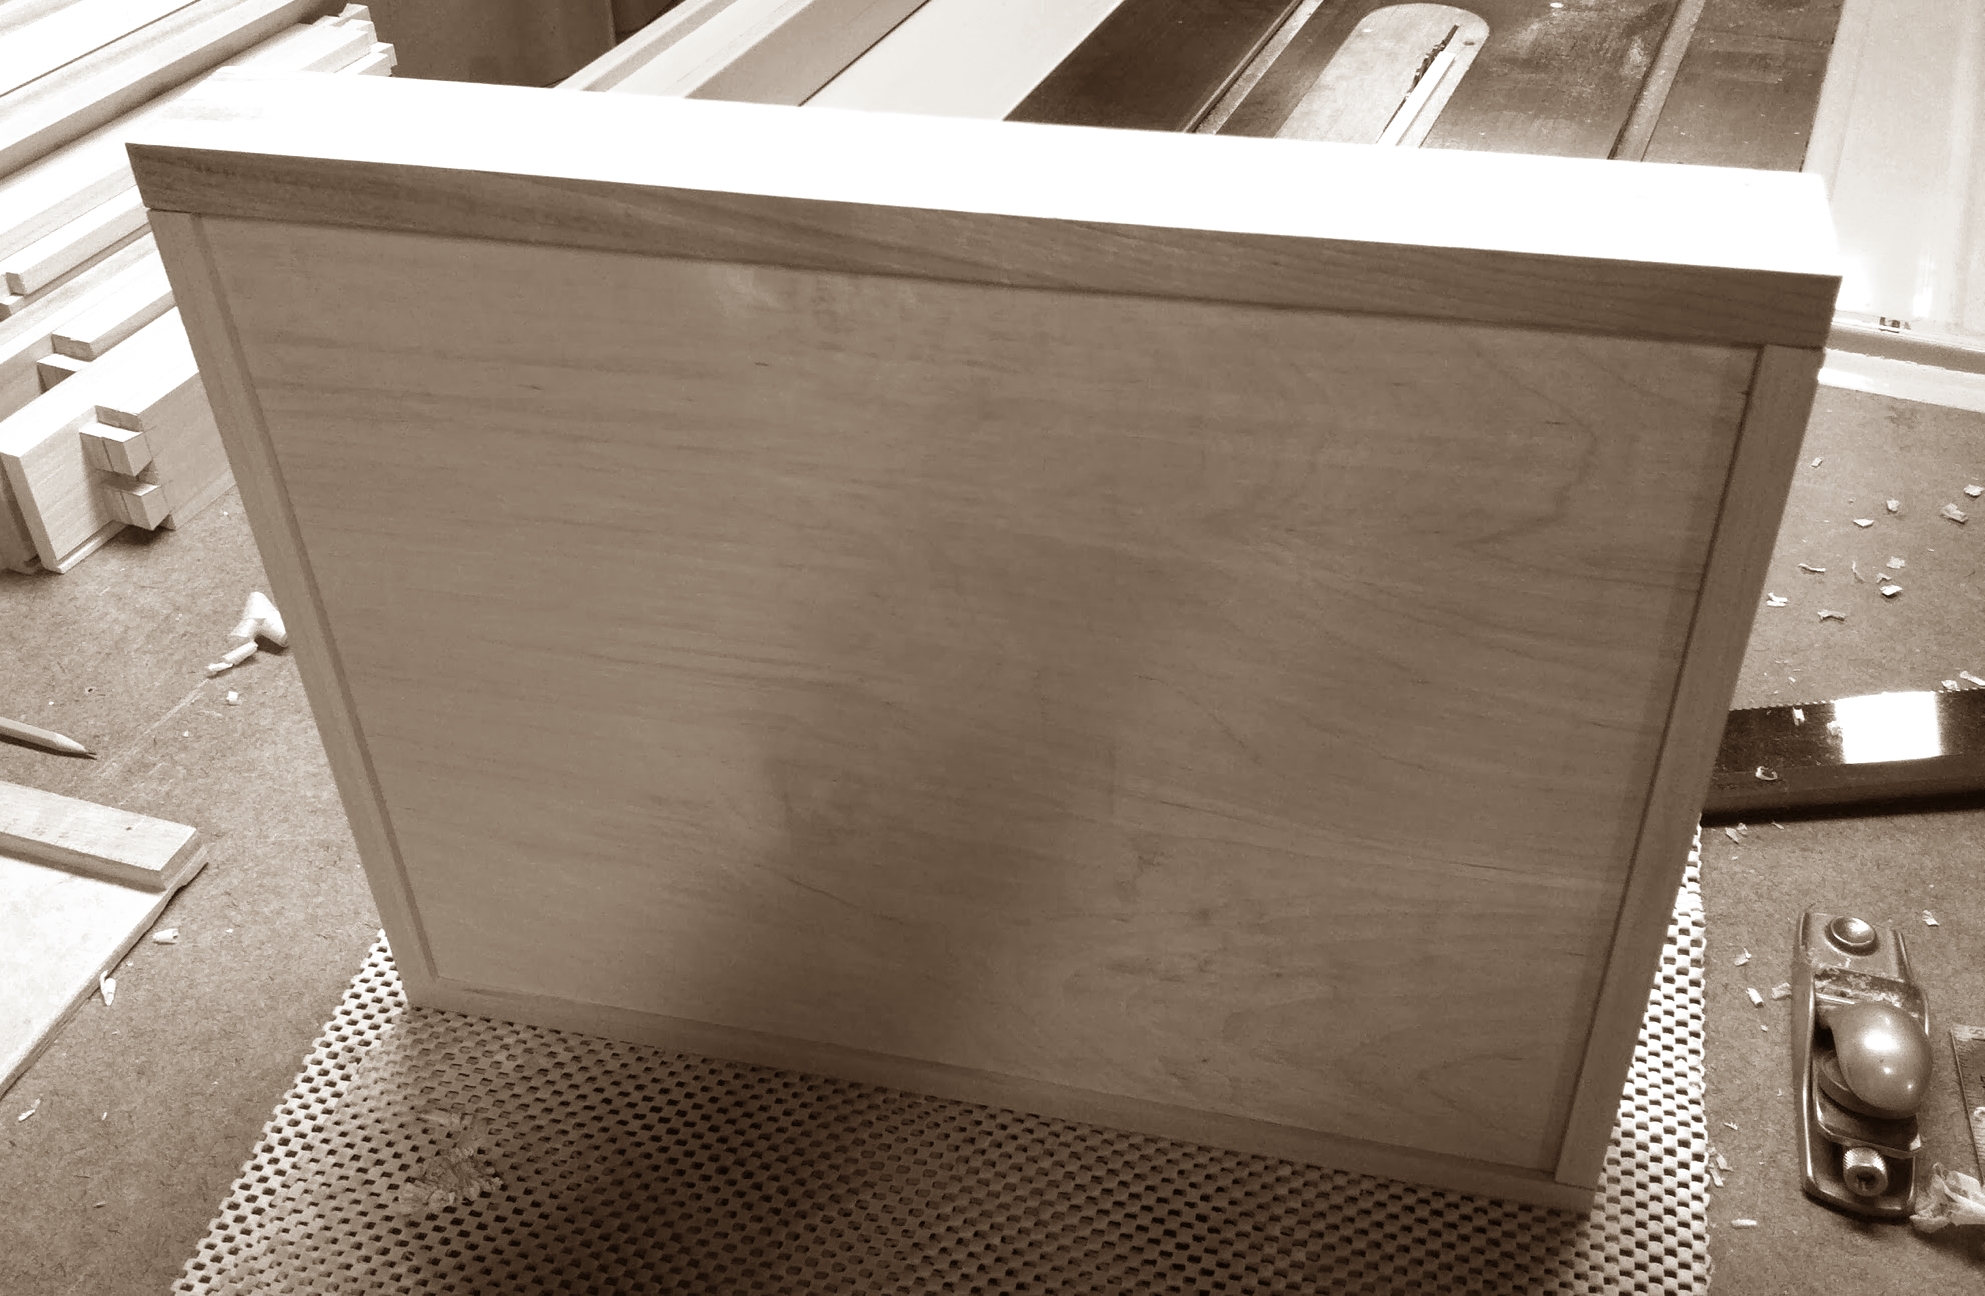 First drawer bottom